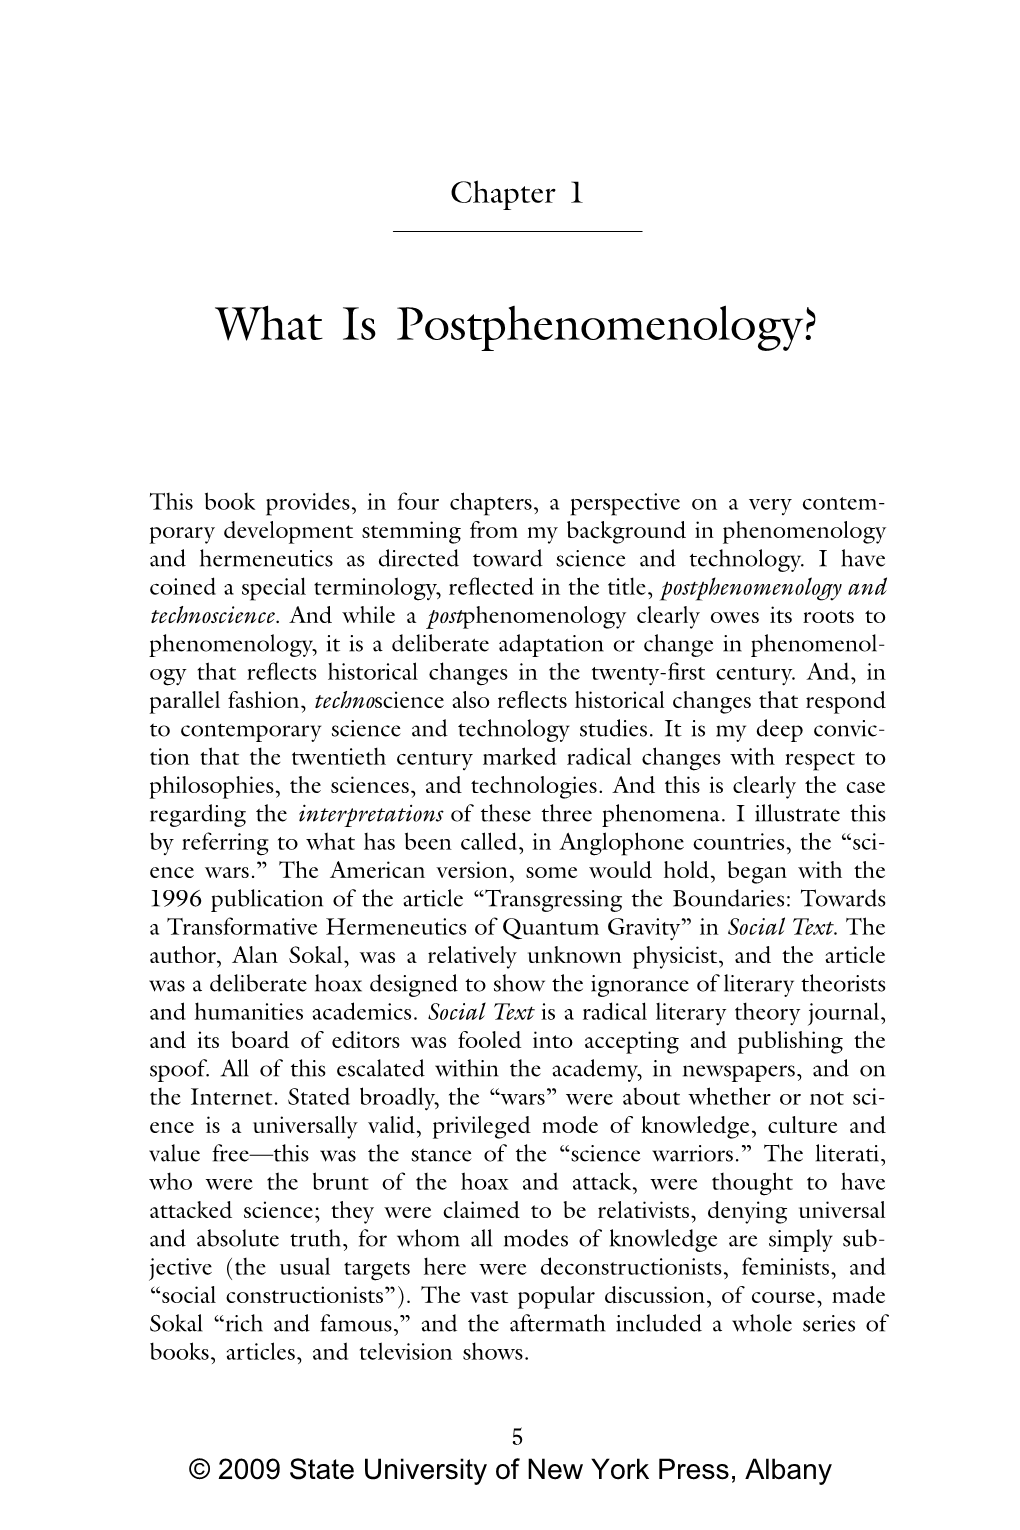 What Is Postphenomenology?